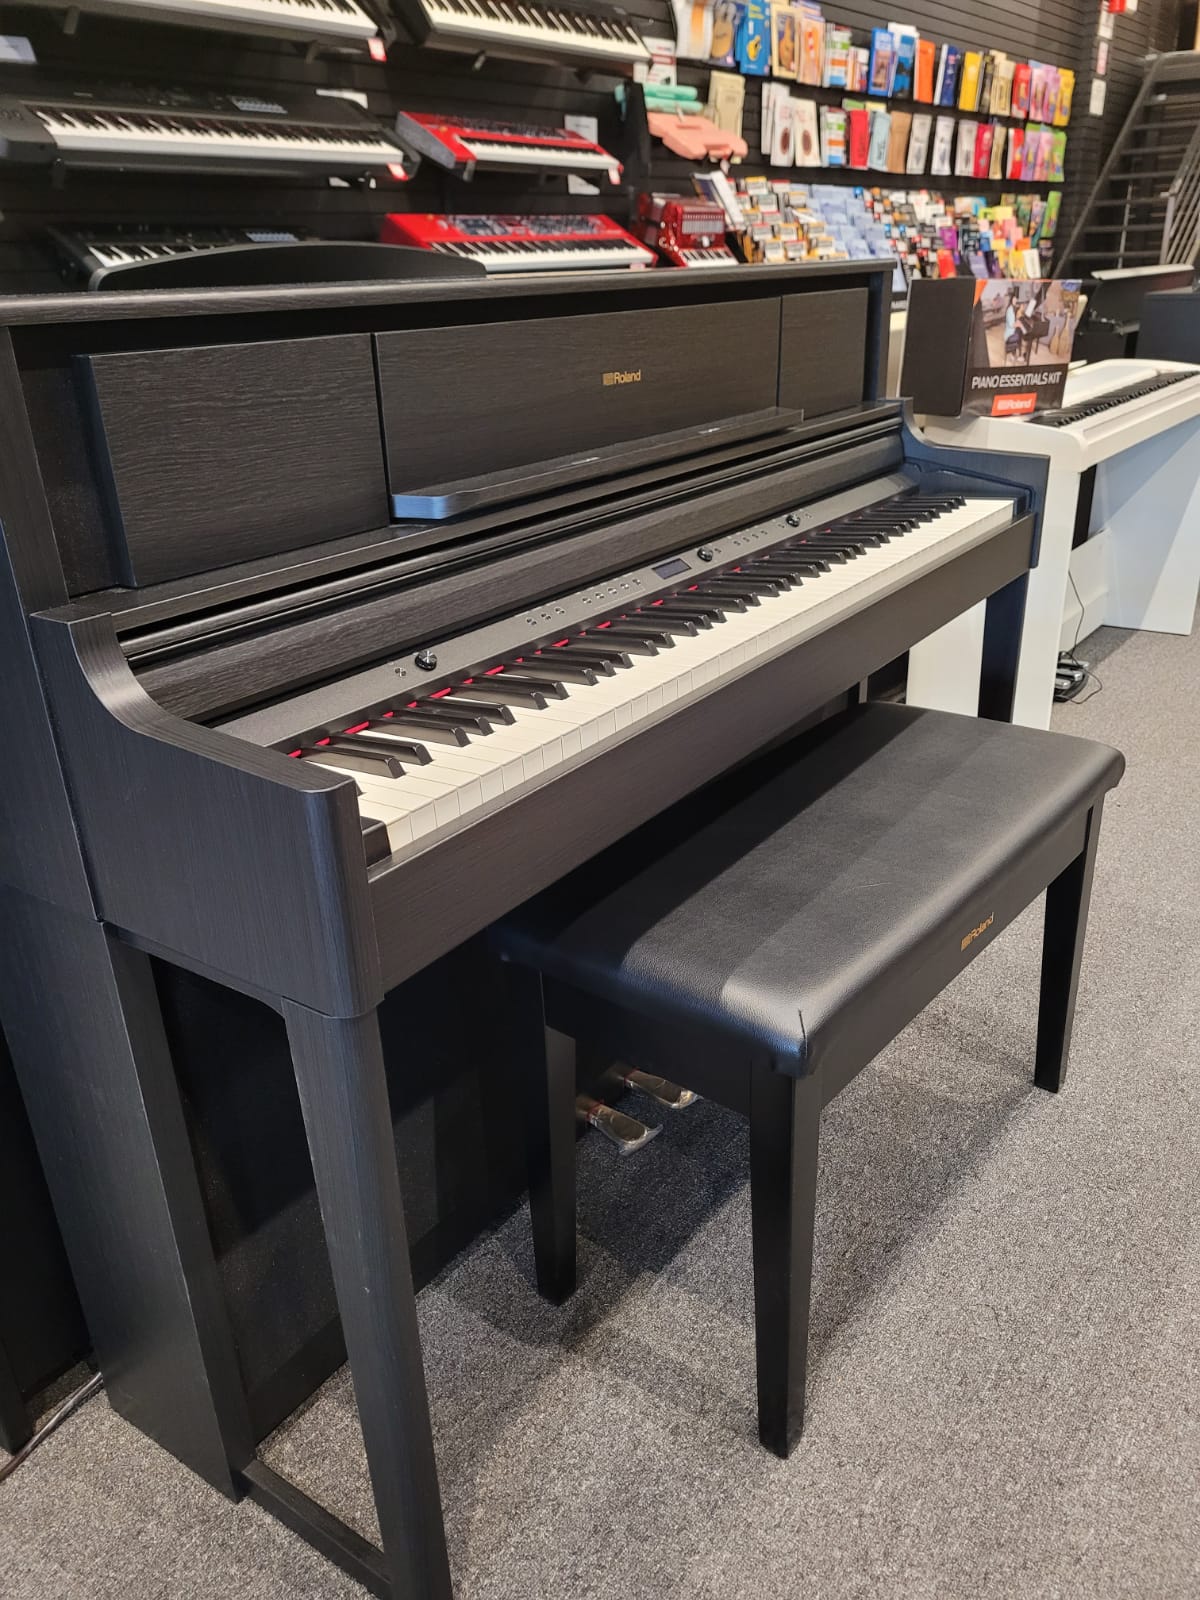 Roland LX705 88 Key Digital Piano - Charcoal Black